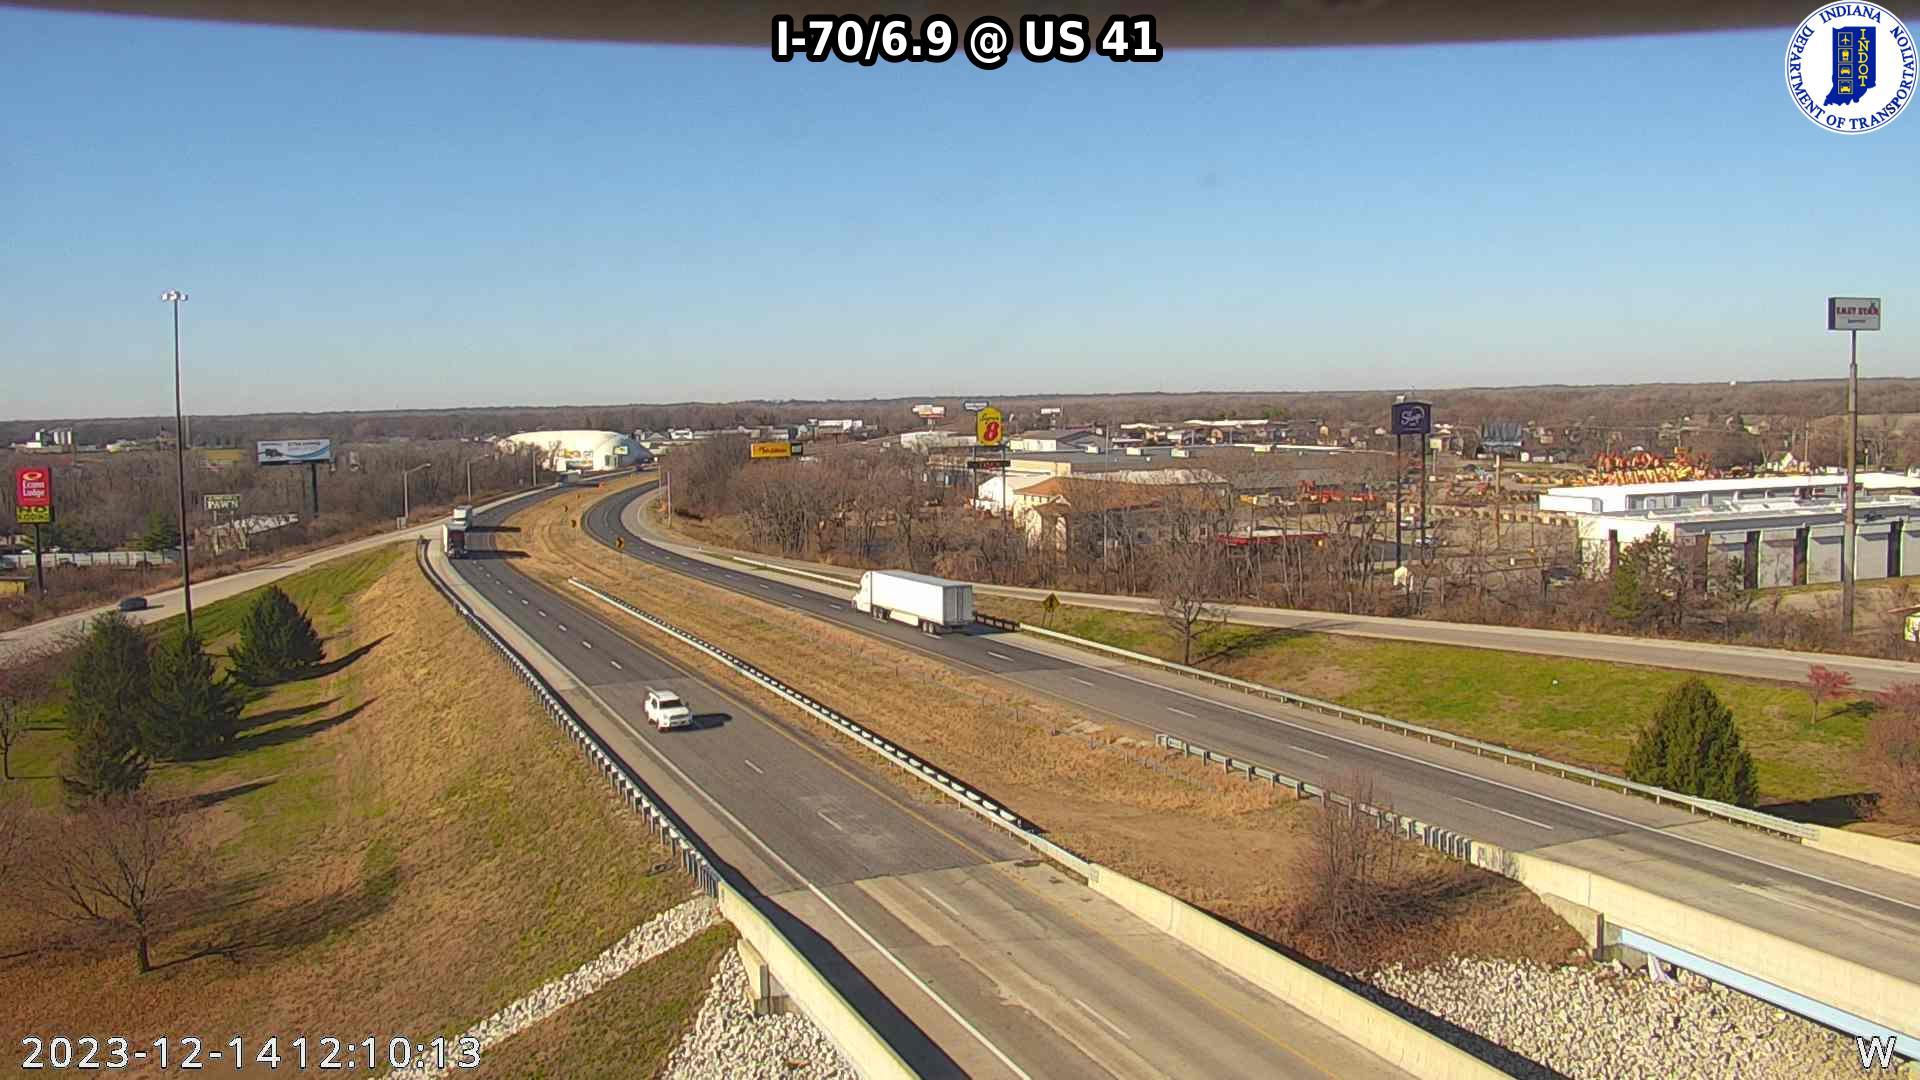 Terre Haute: I-70: I-70/6.9 @ US Traffic Camera